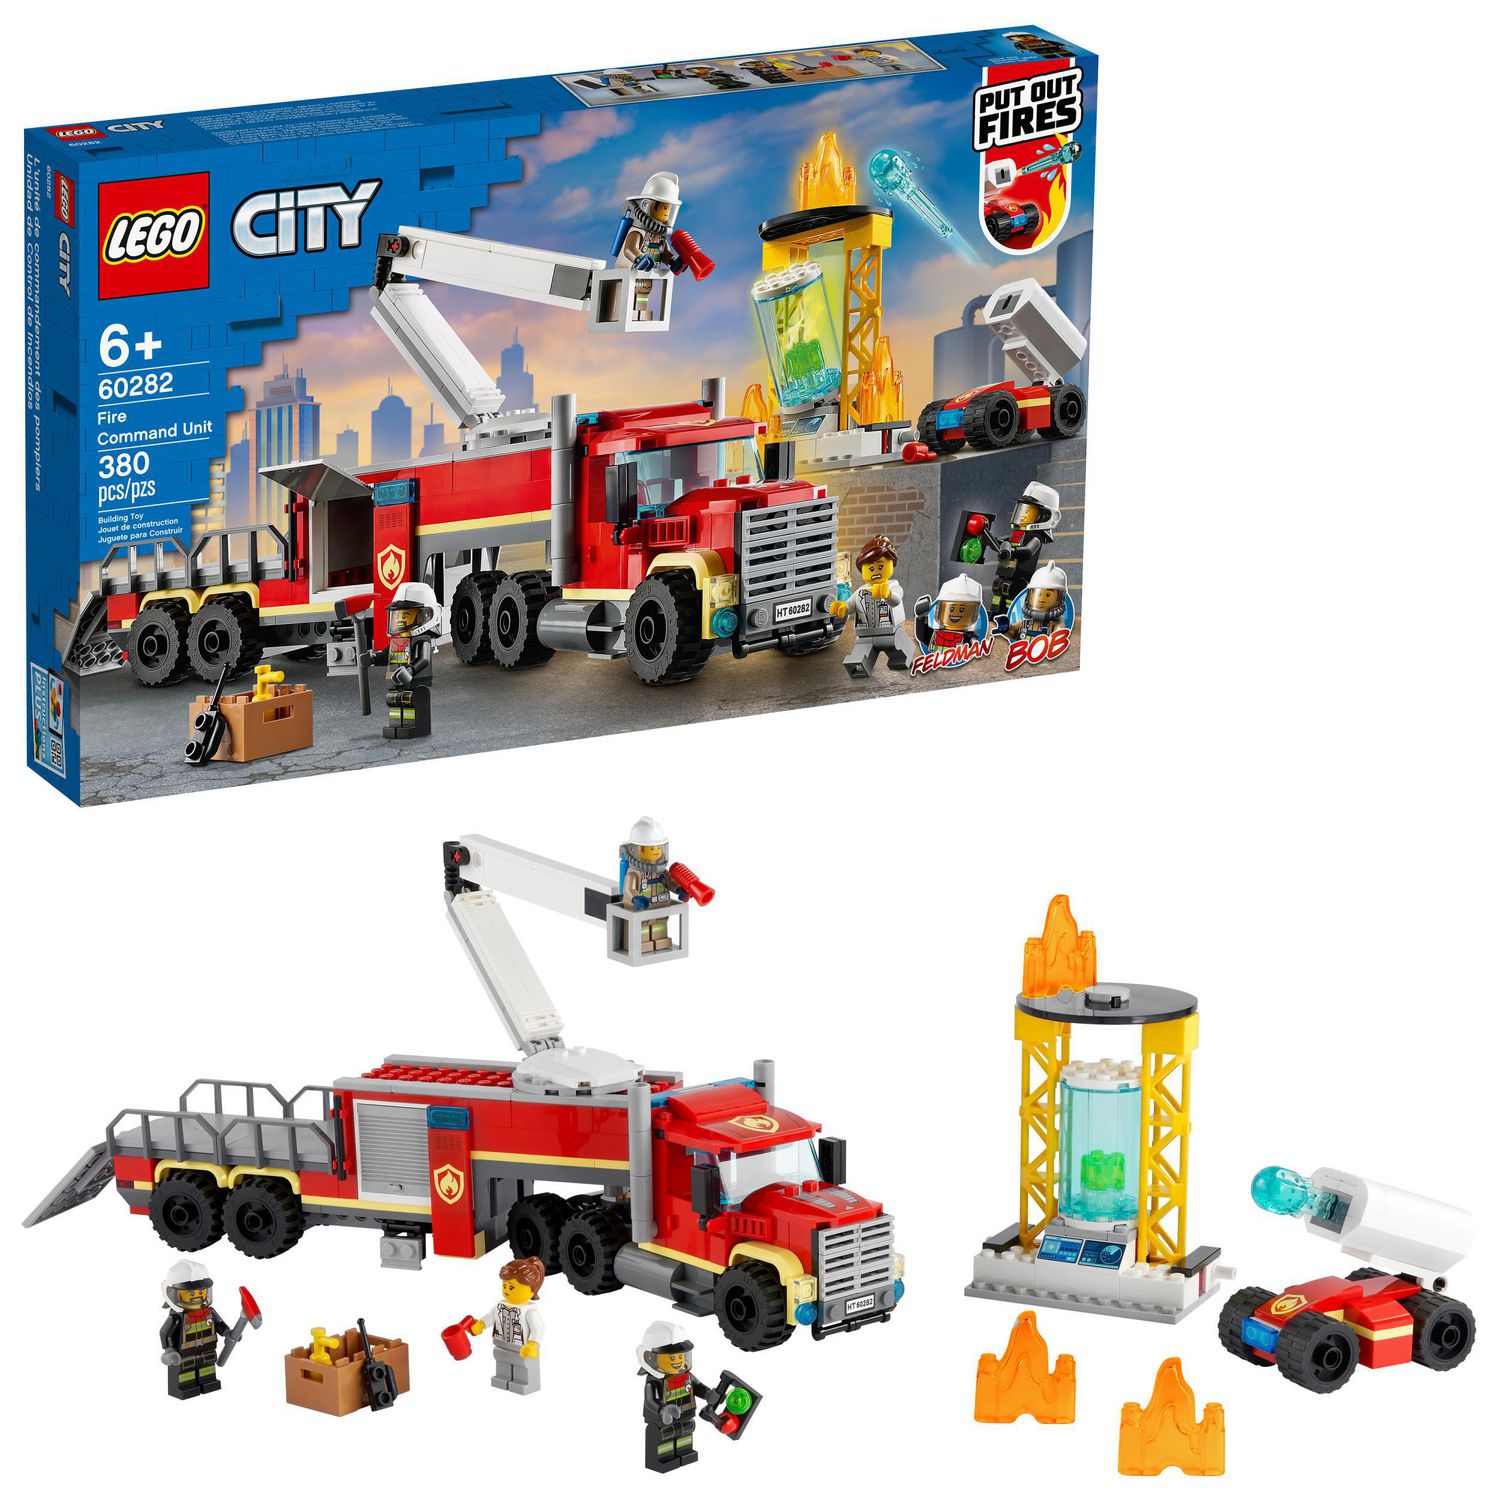 Samarbejdsvillig bryder ud klima LEGO City Fire Command Unit 60282 Toy Building Kit (380 Pieces) | Walmart  Canada